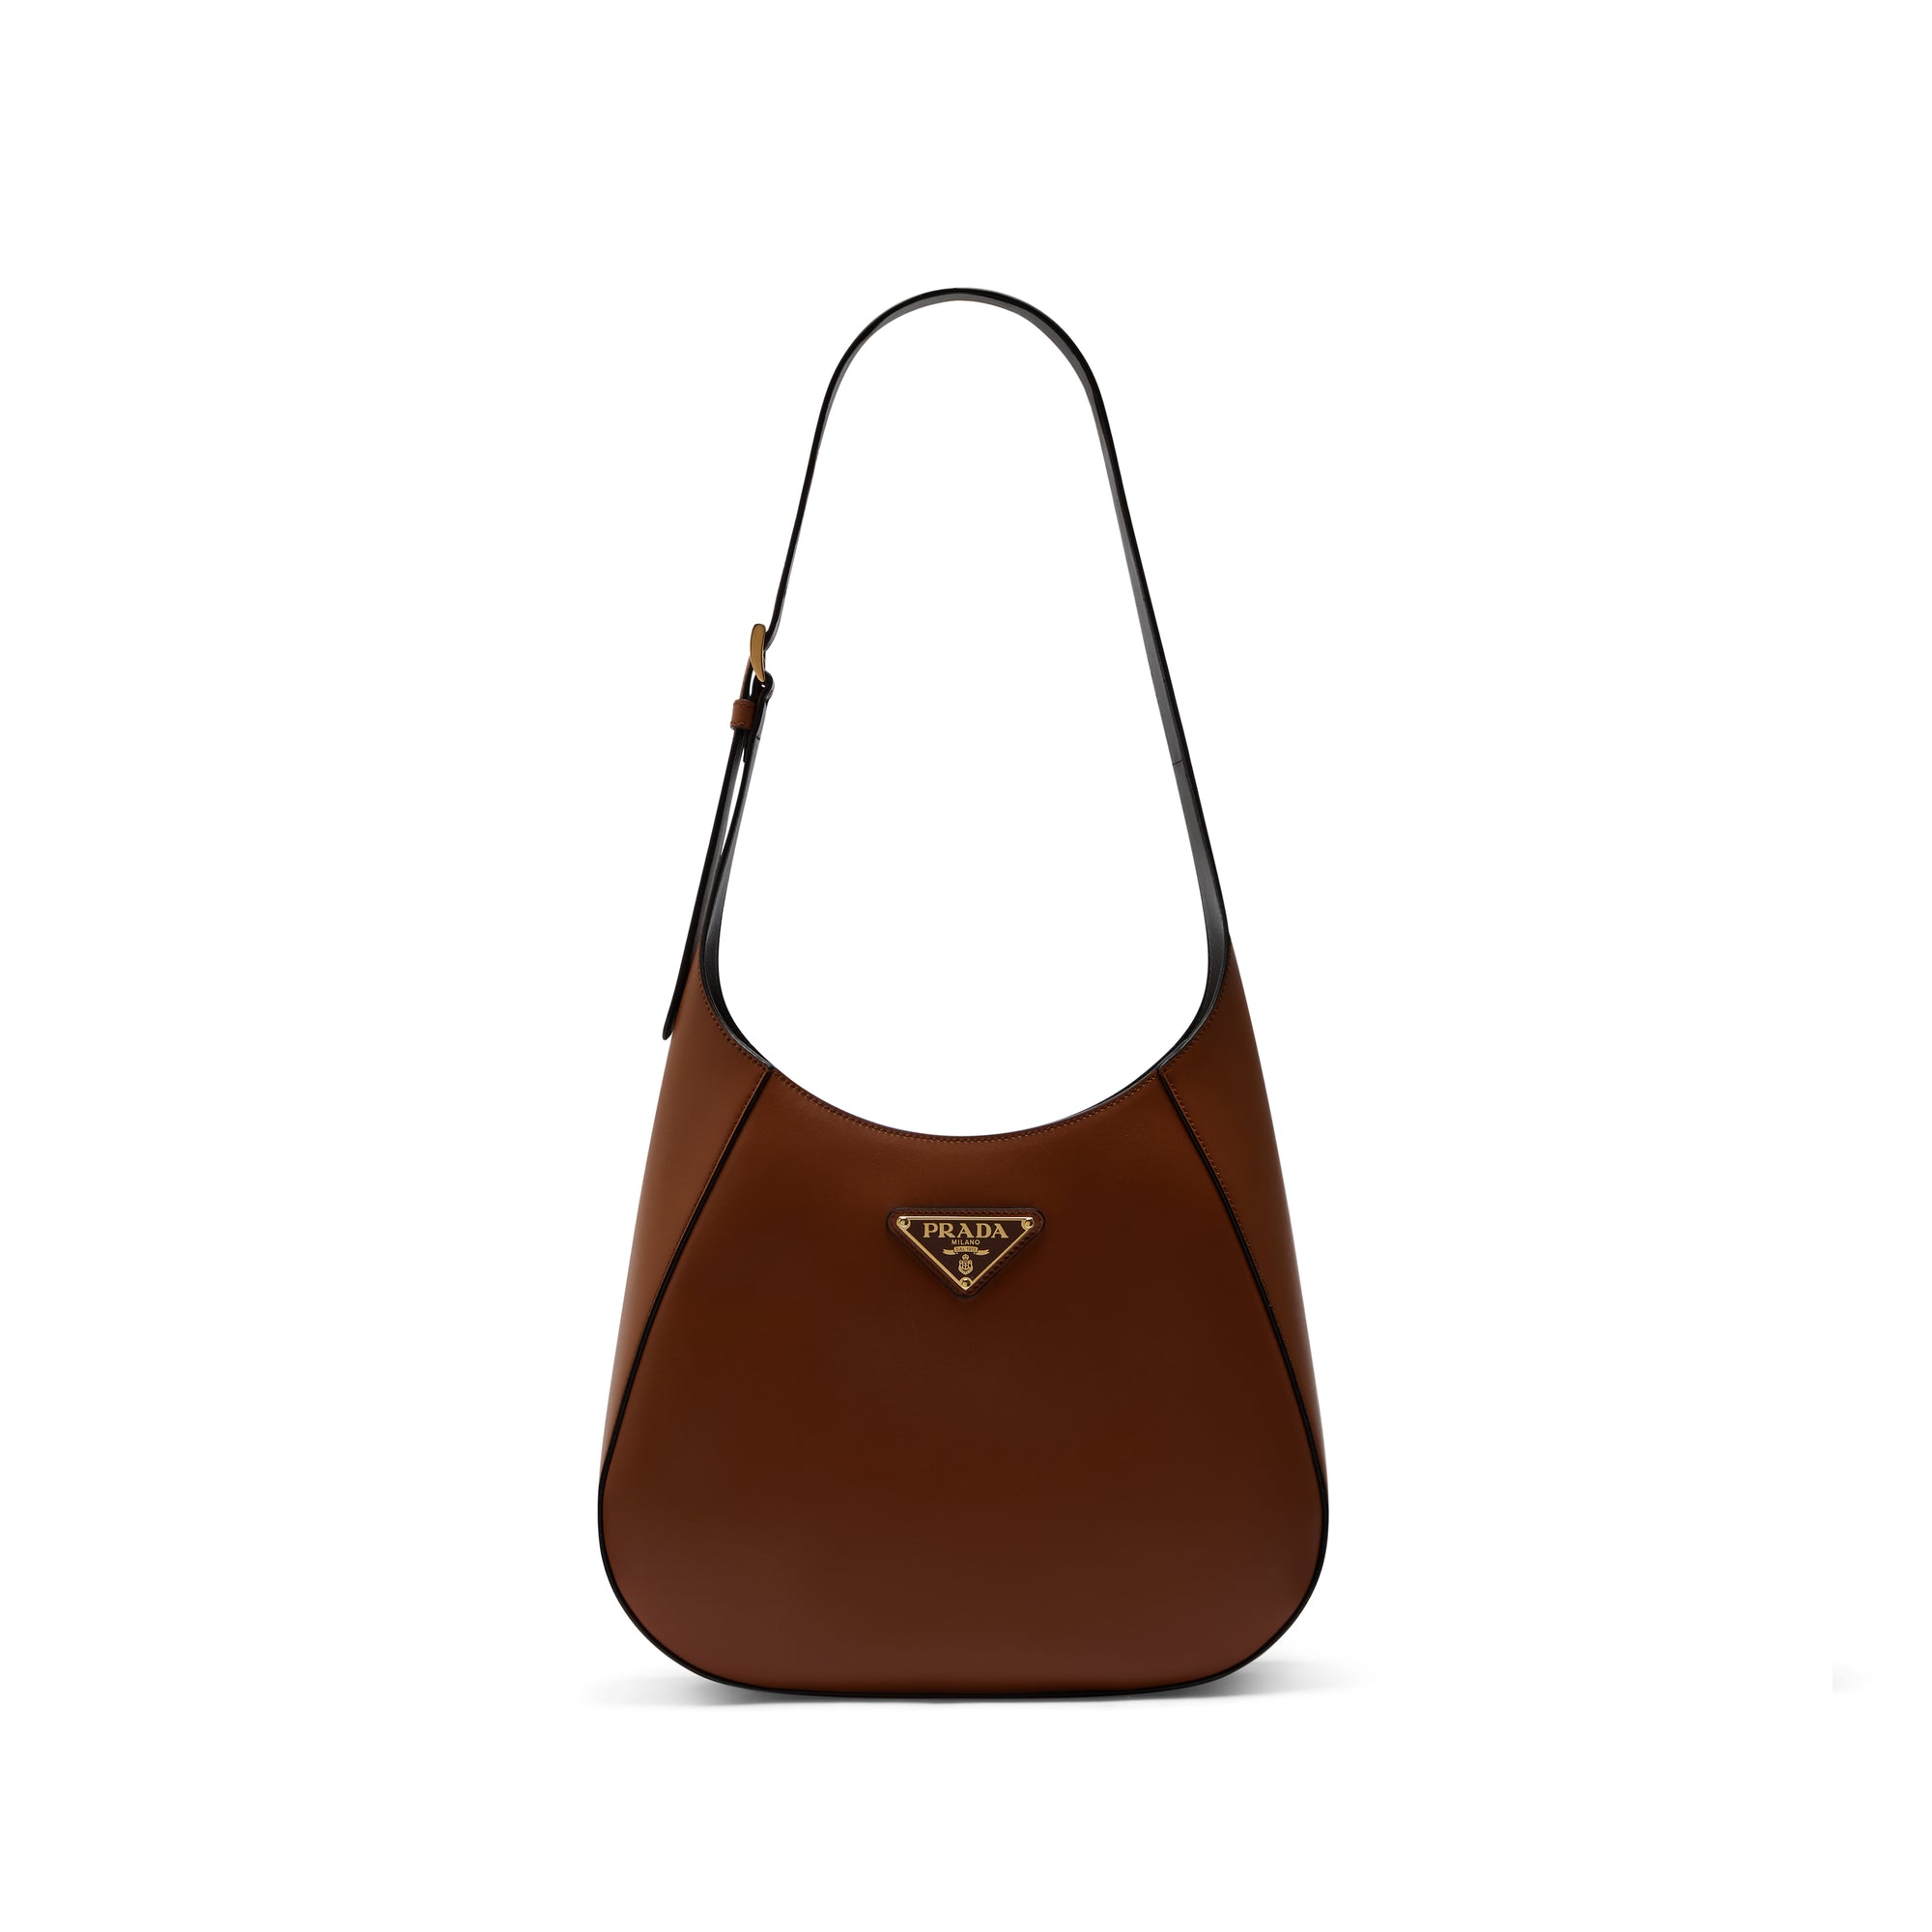 Prada - Women’s Large Leather Handbag - (Cognac) view 1